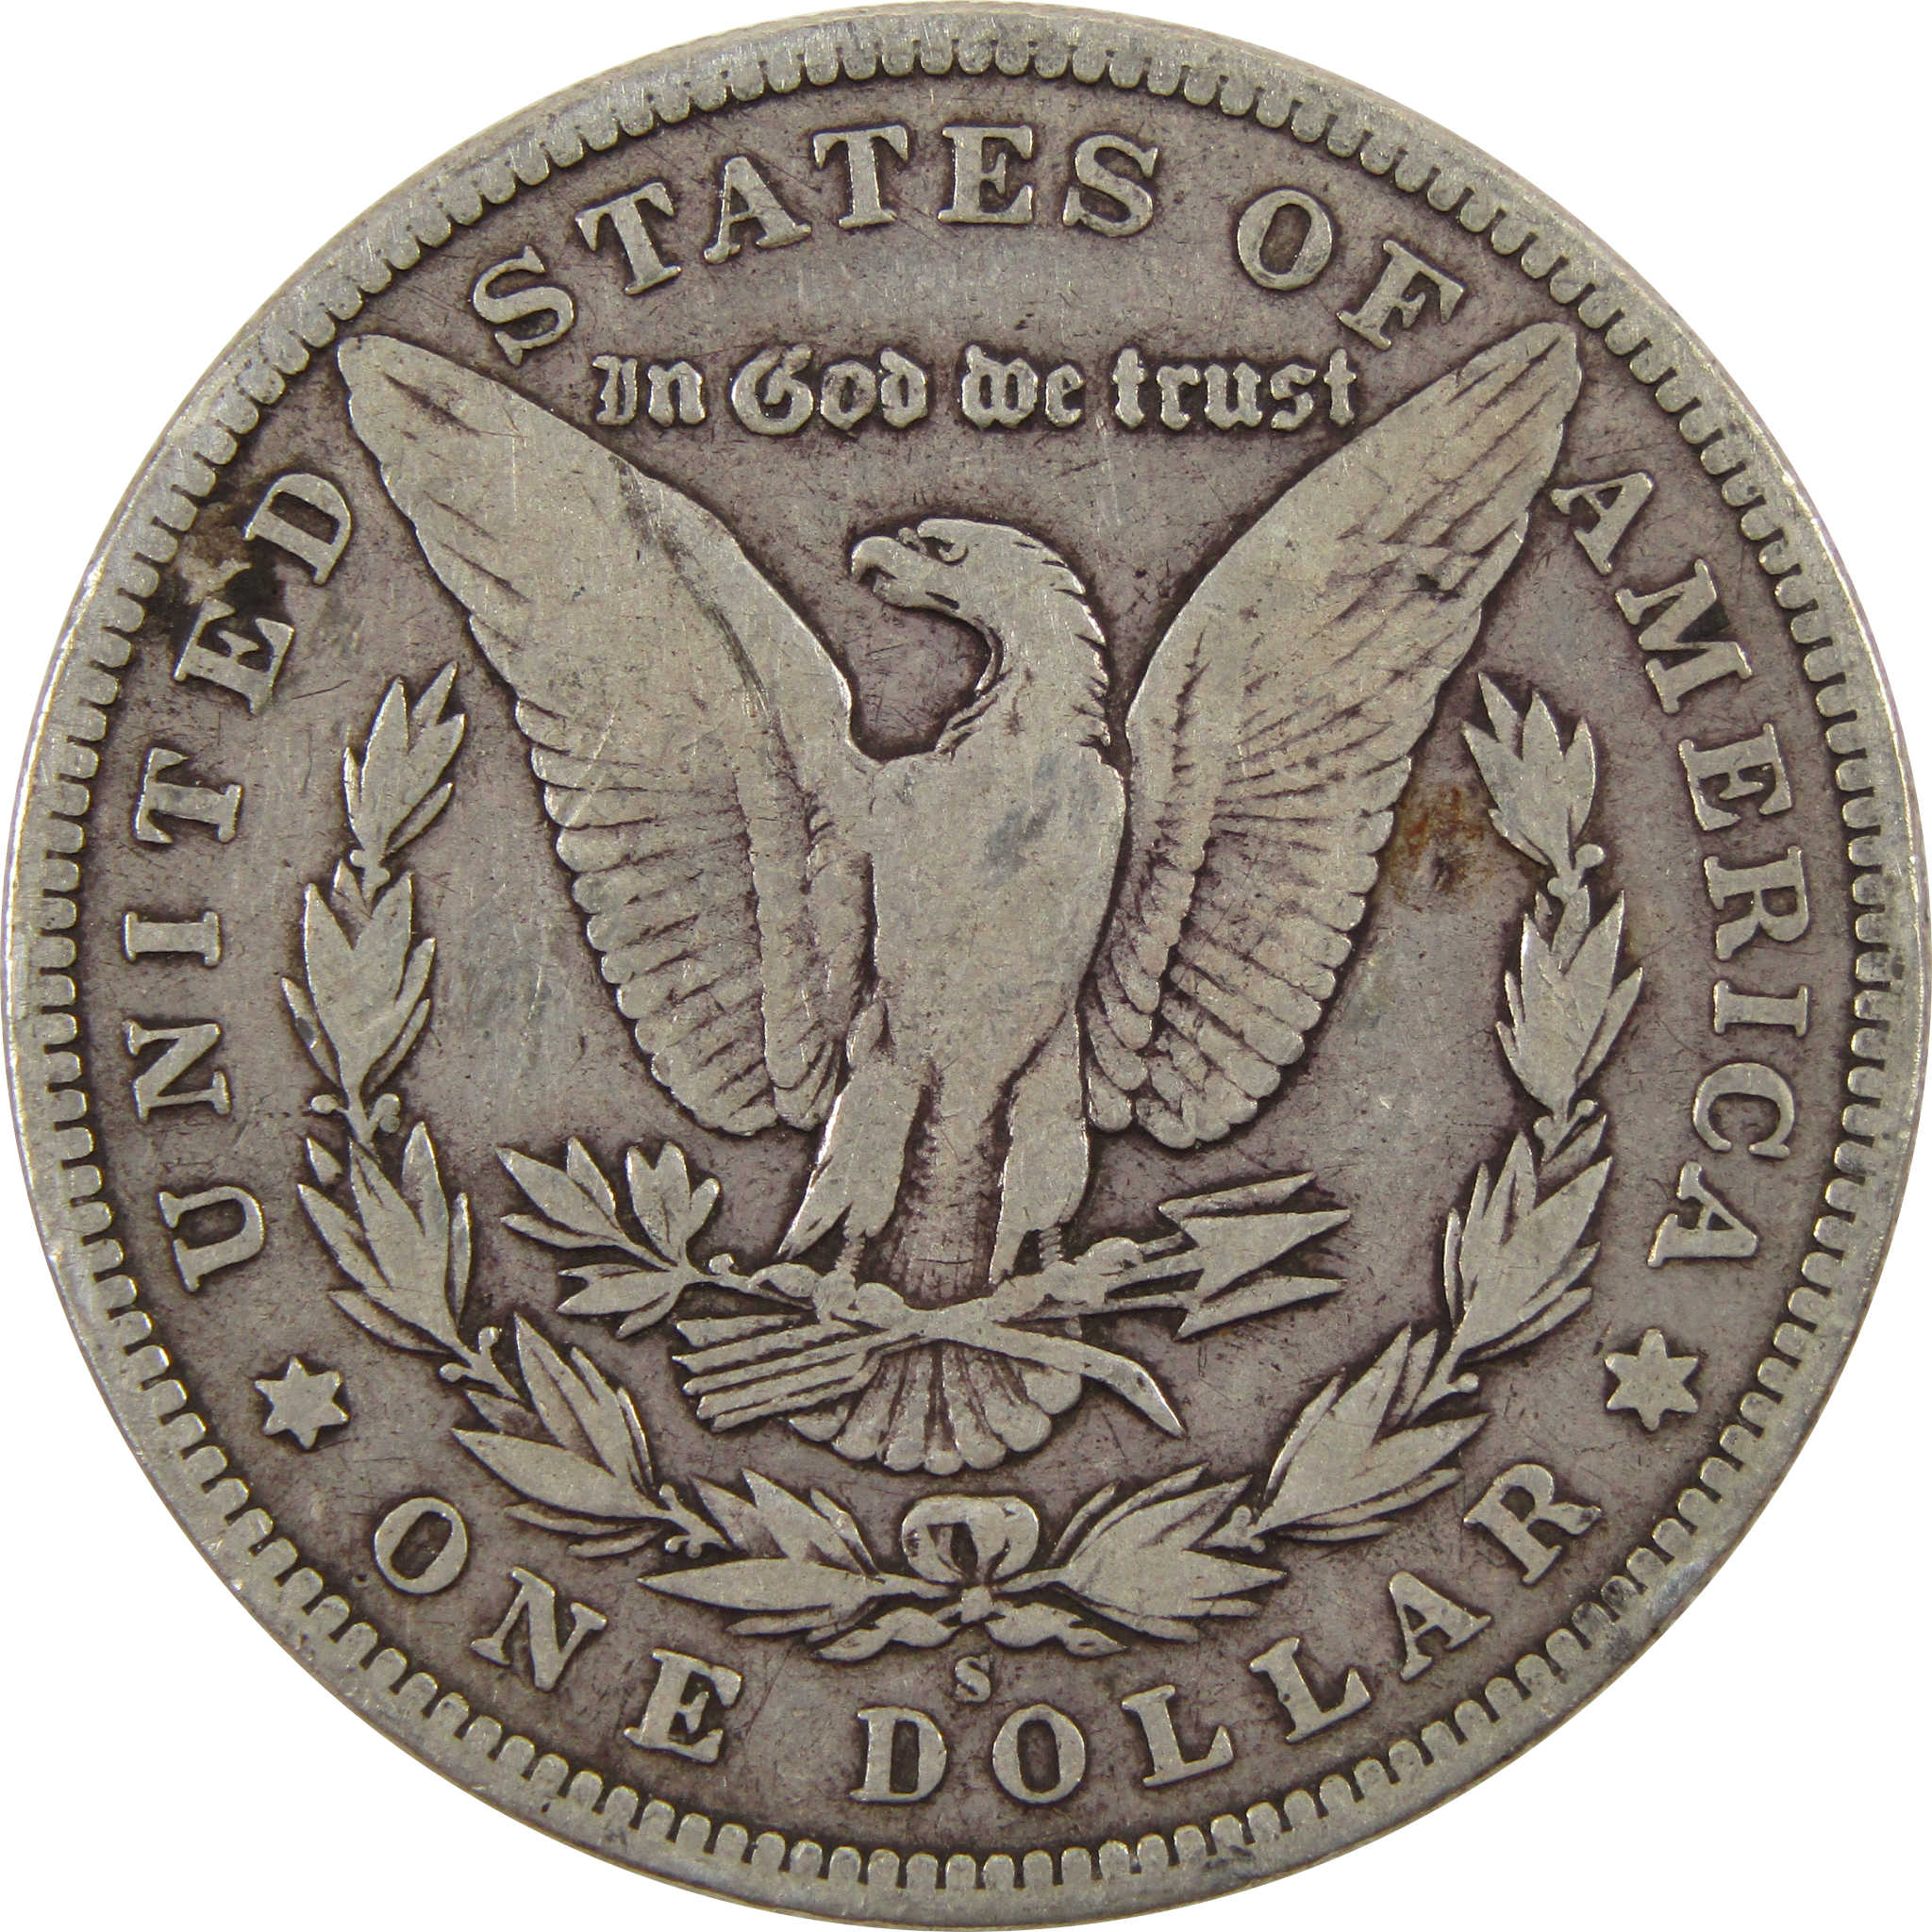 1896 S Morgan Dollar F Fine 90% Silver $1 Coin SKU:I9162 - Morgan coin - Morgan silver dollar - Morgan silver dollar for sale - Profile Coins &amp; Collectibles